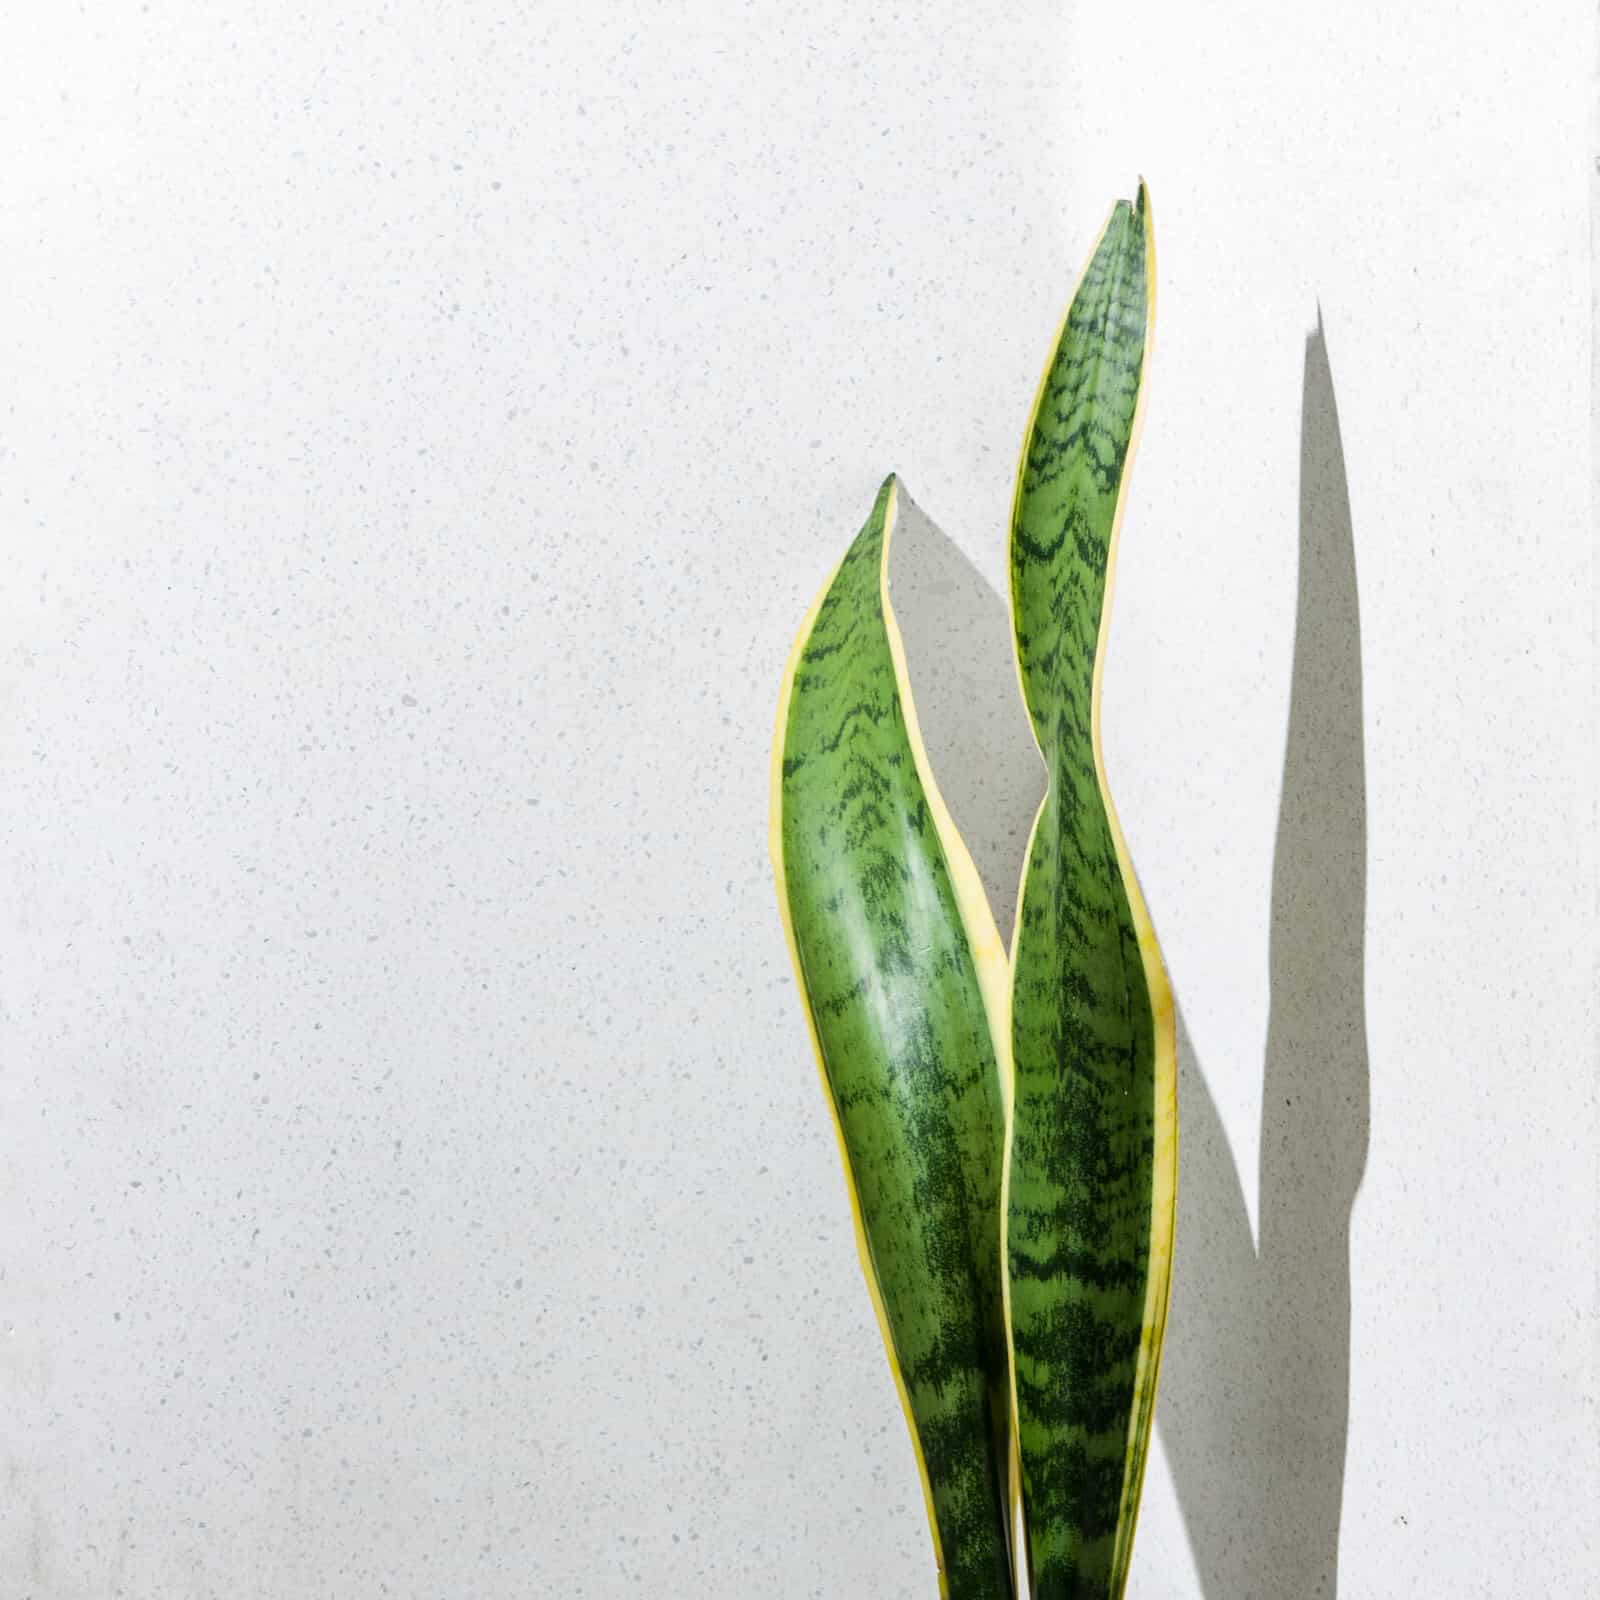 Variegated snake plant leaves against a plain white background.